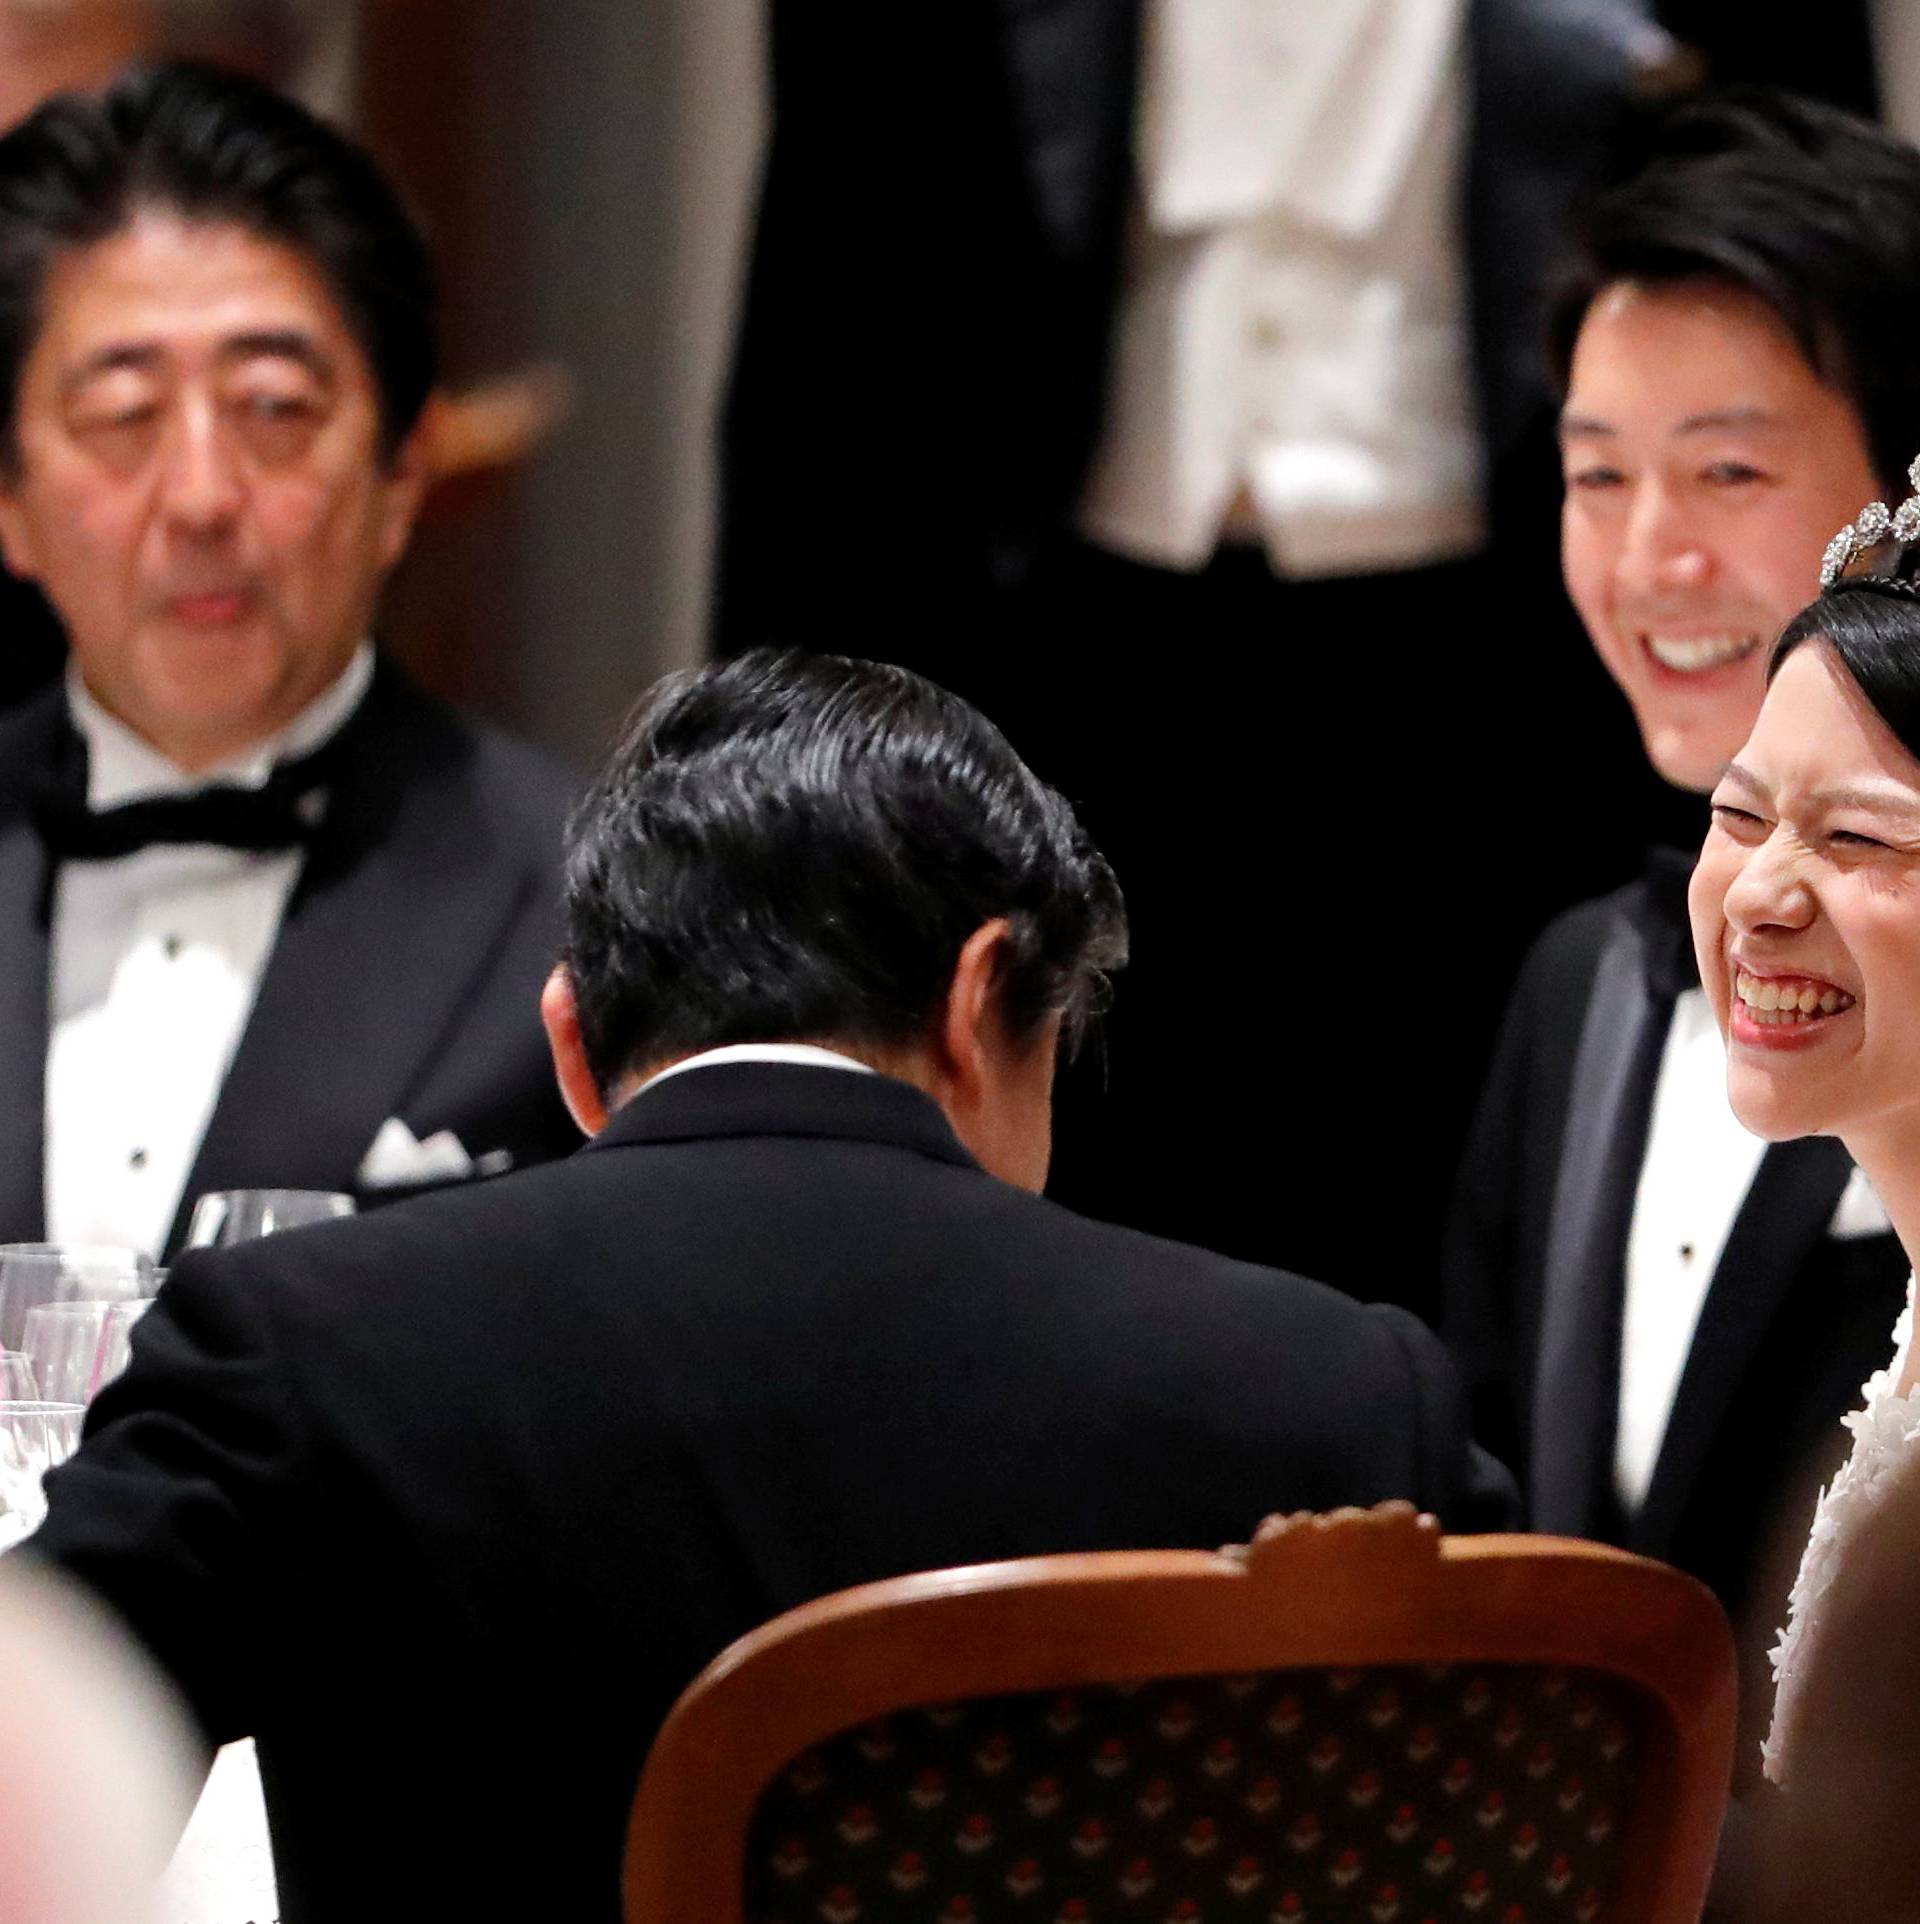 Japan's former princess Ayako Moriya and her husband Kei Moriya talk with Crown Prince Naruhito as Prime Minister Shinzo Abe looks on at their wedding banquet in Tokyo